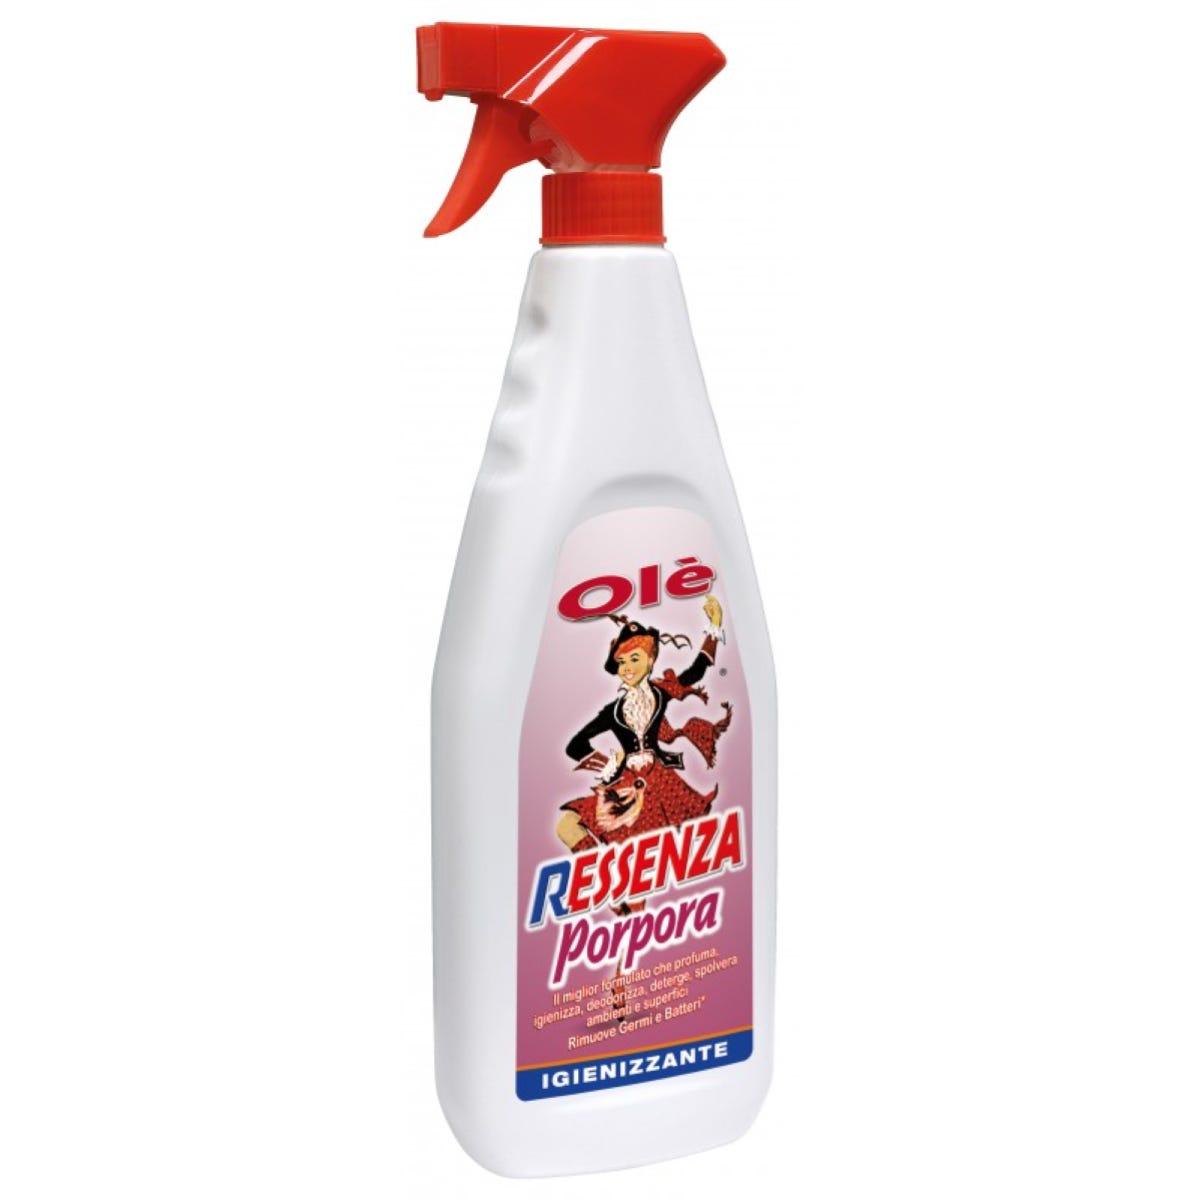 OLÈ RESSENZA profumata ml.750 12 PEZZI igienizzante detergente spray  Porpora